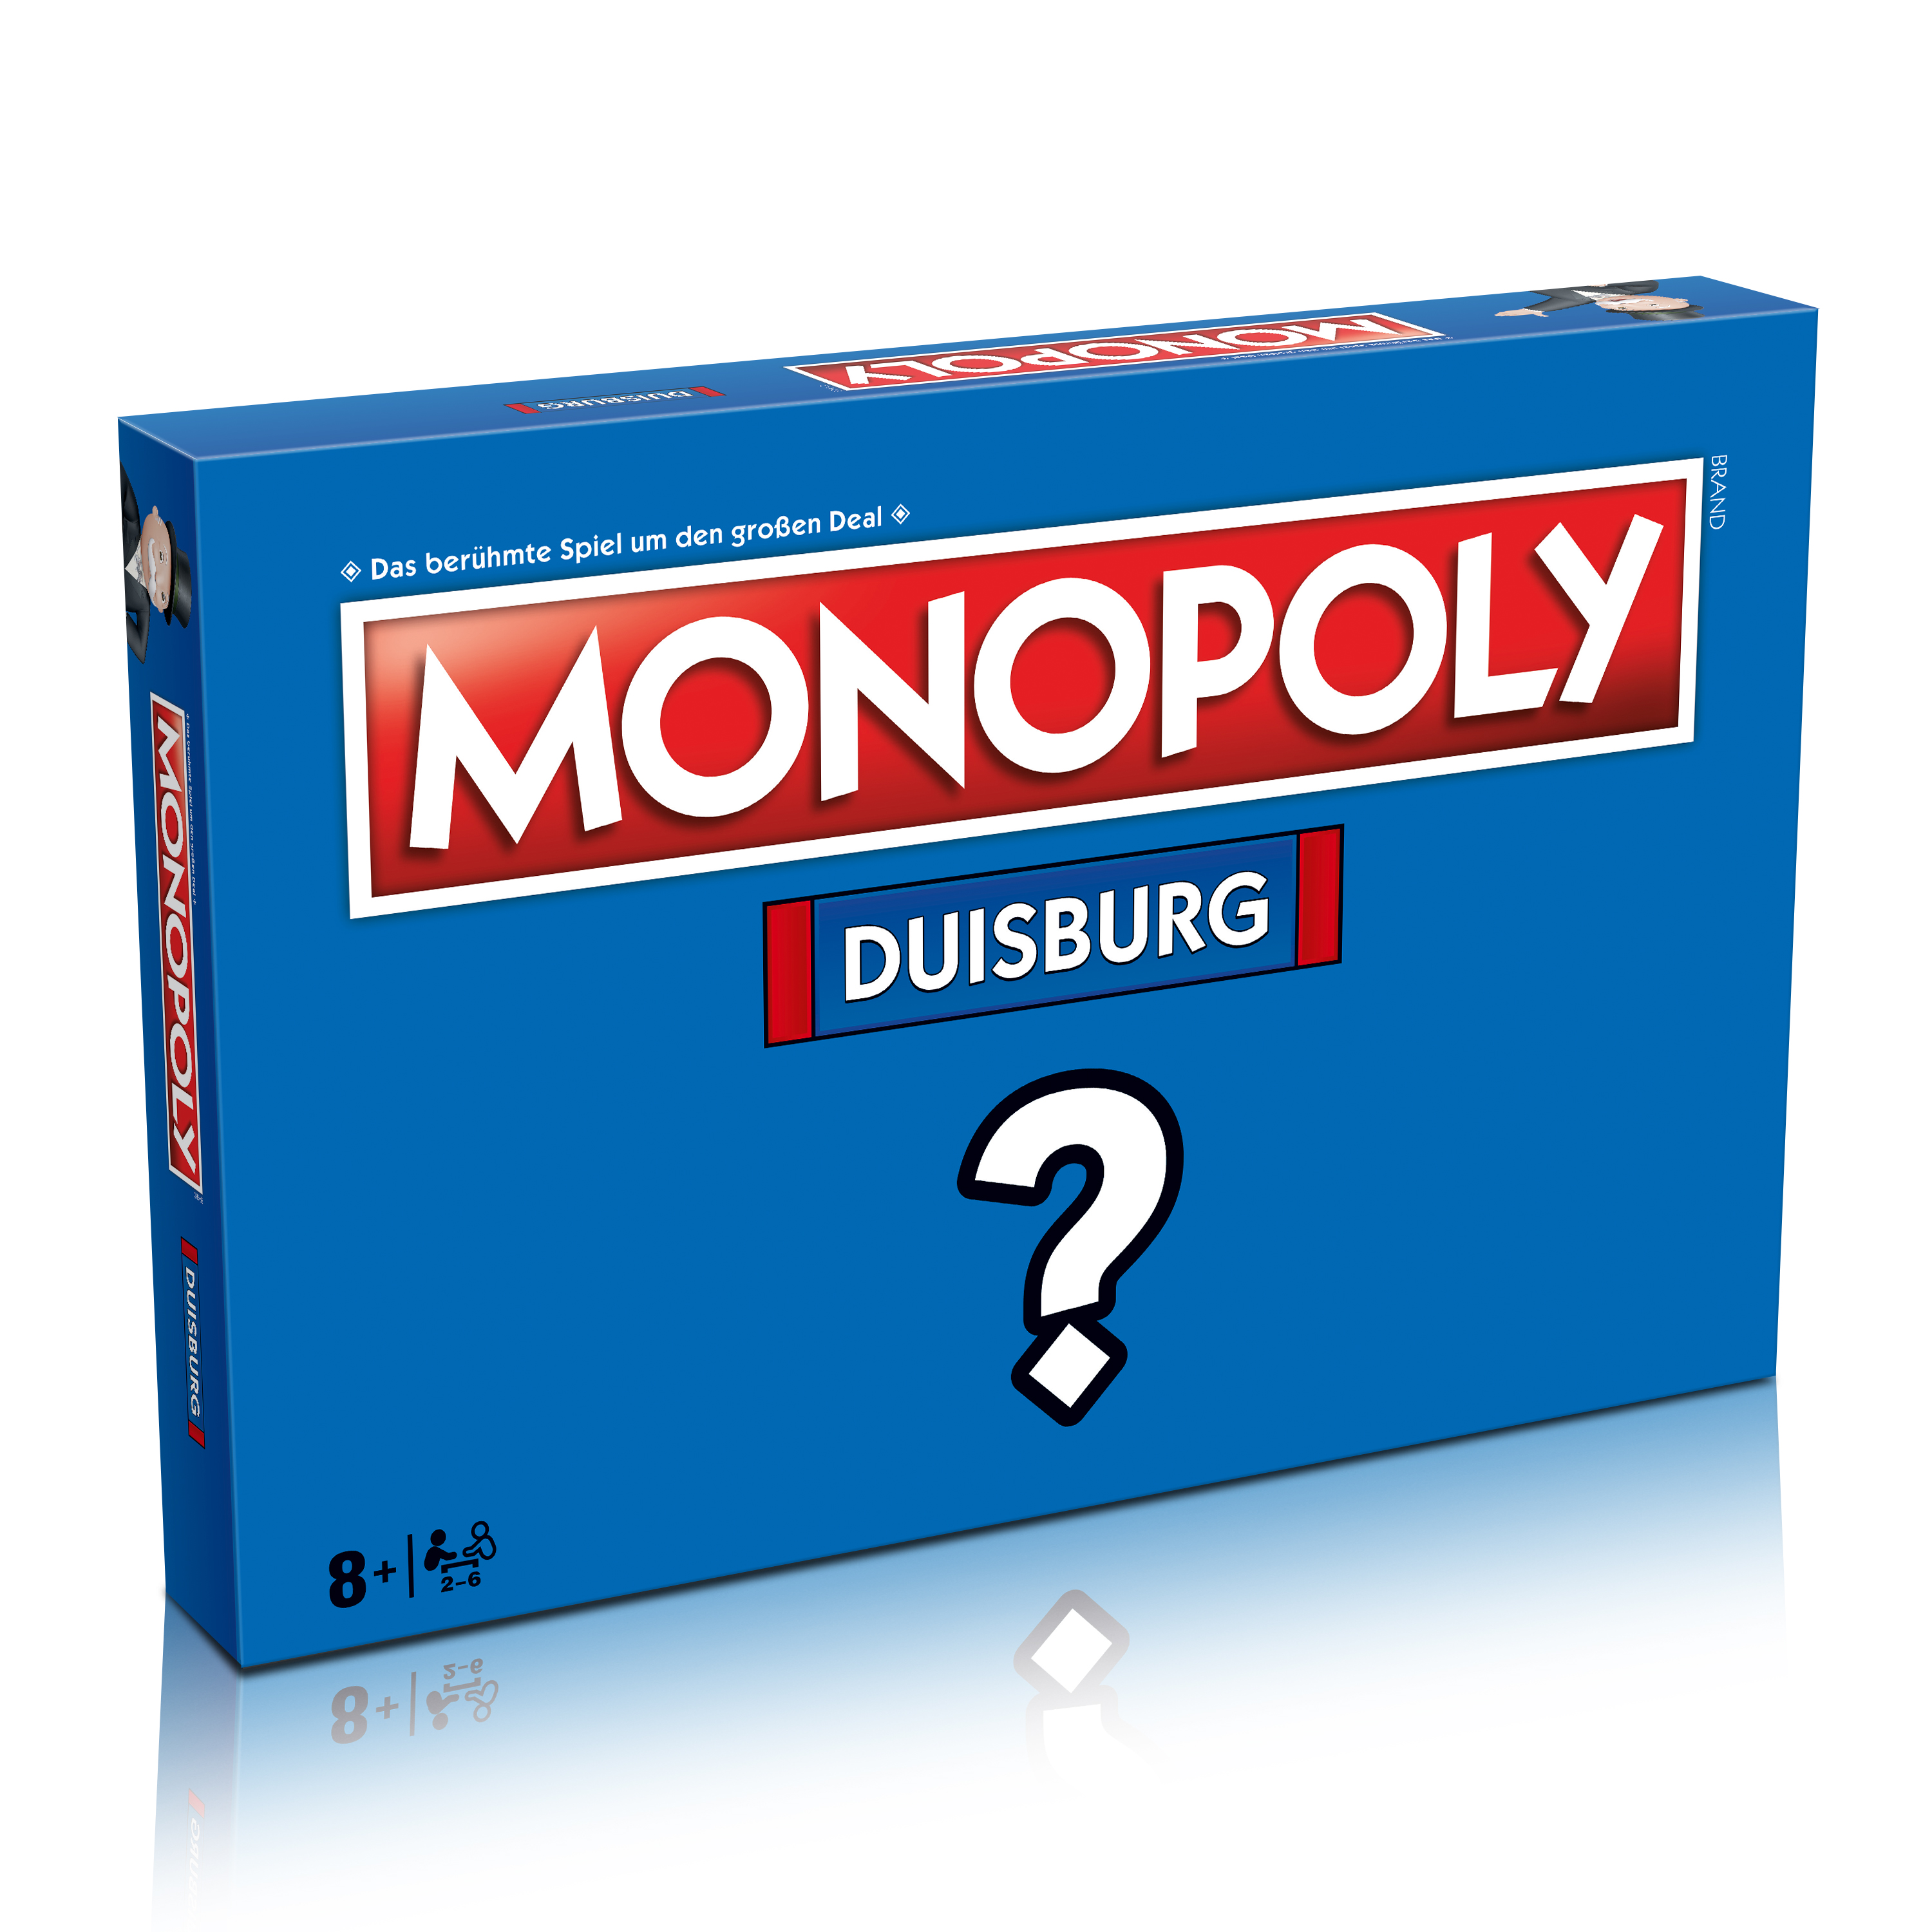 Monopoly Städteedition - Duisburg